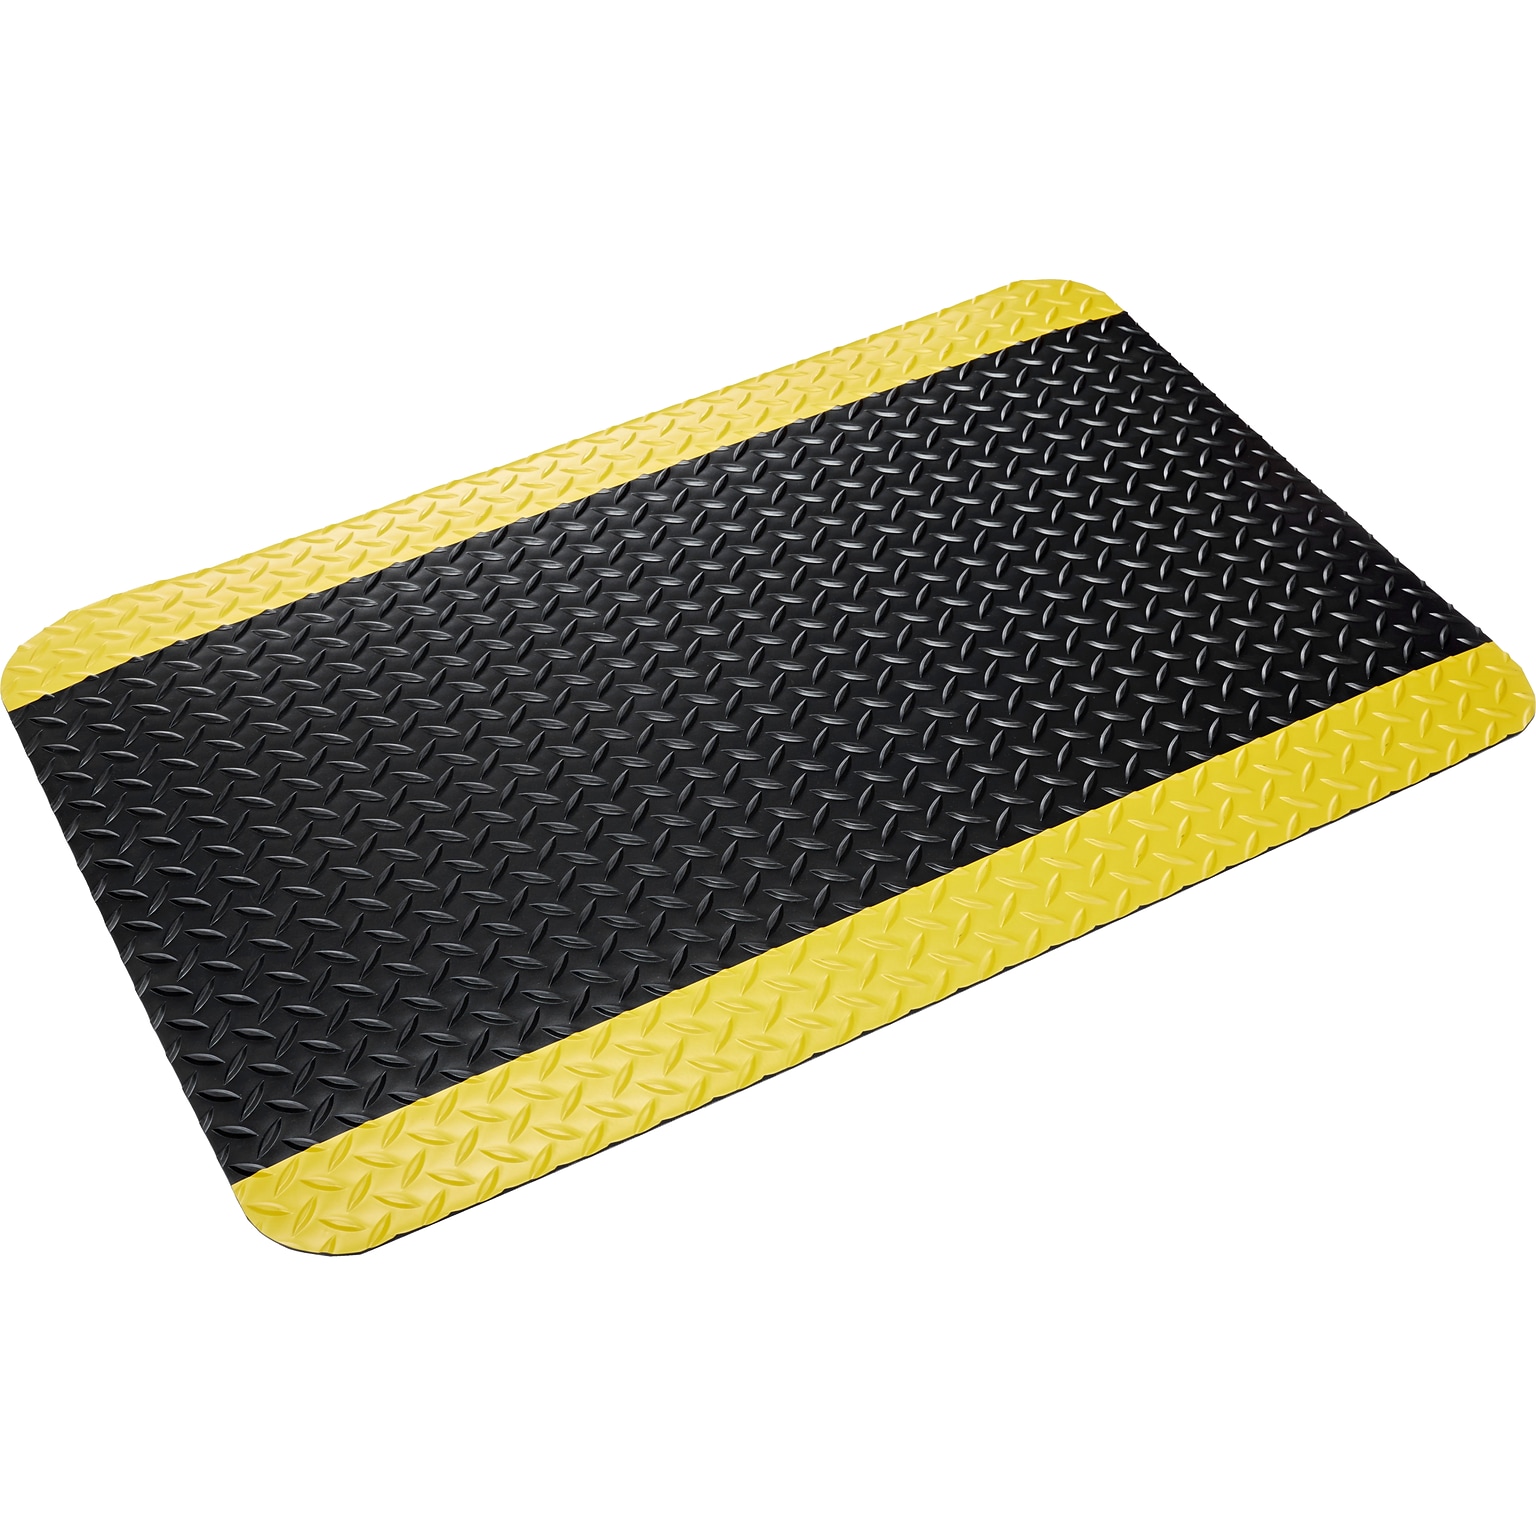 Crown Mats Industrial Deck Plate Anti-Fatigue Mat, 36 x 60, Black/Yellow (CD 0035YB)